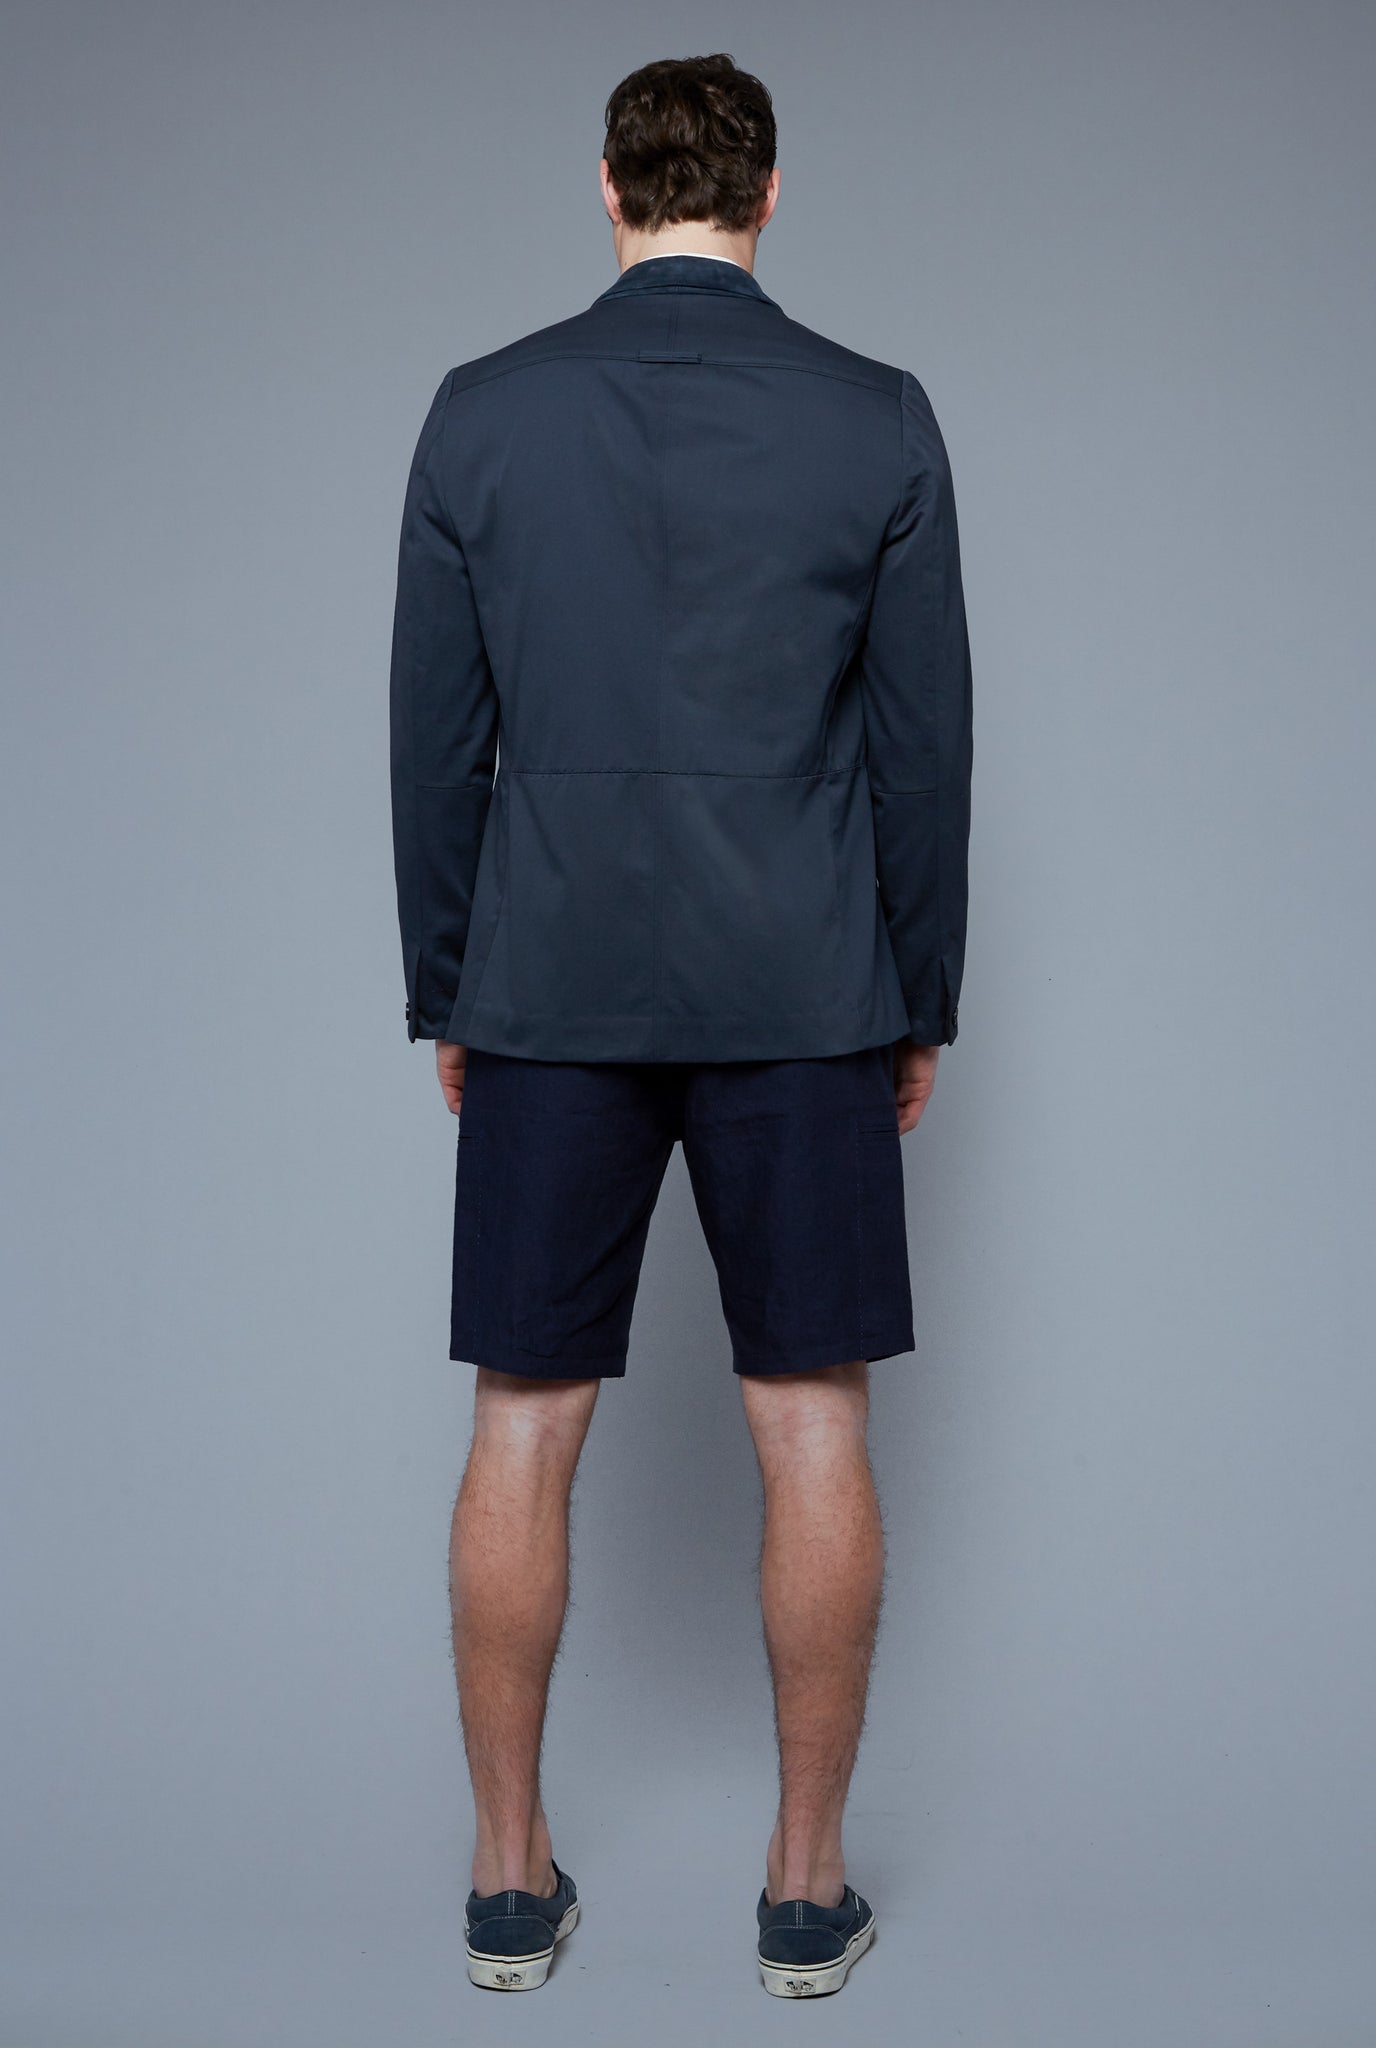 Back View: Model Hans Weiner wearing Peak Summer Jacket